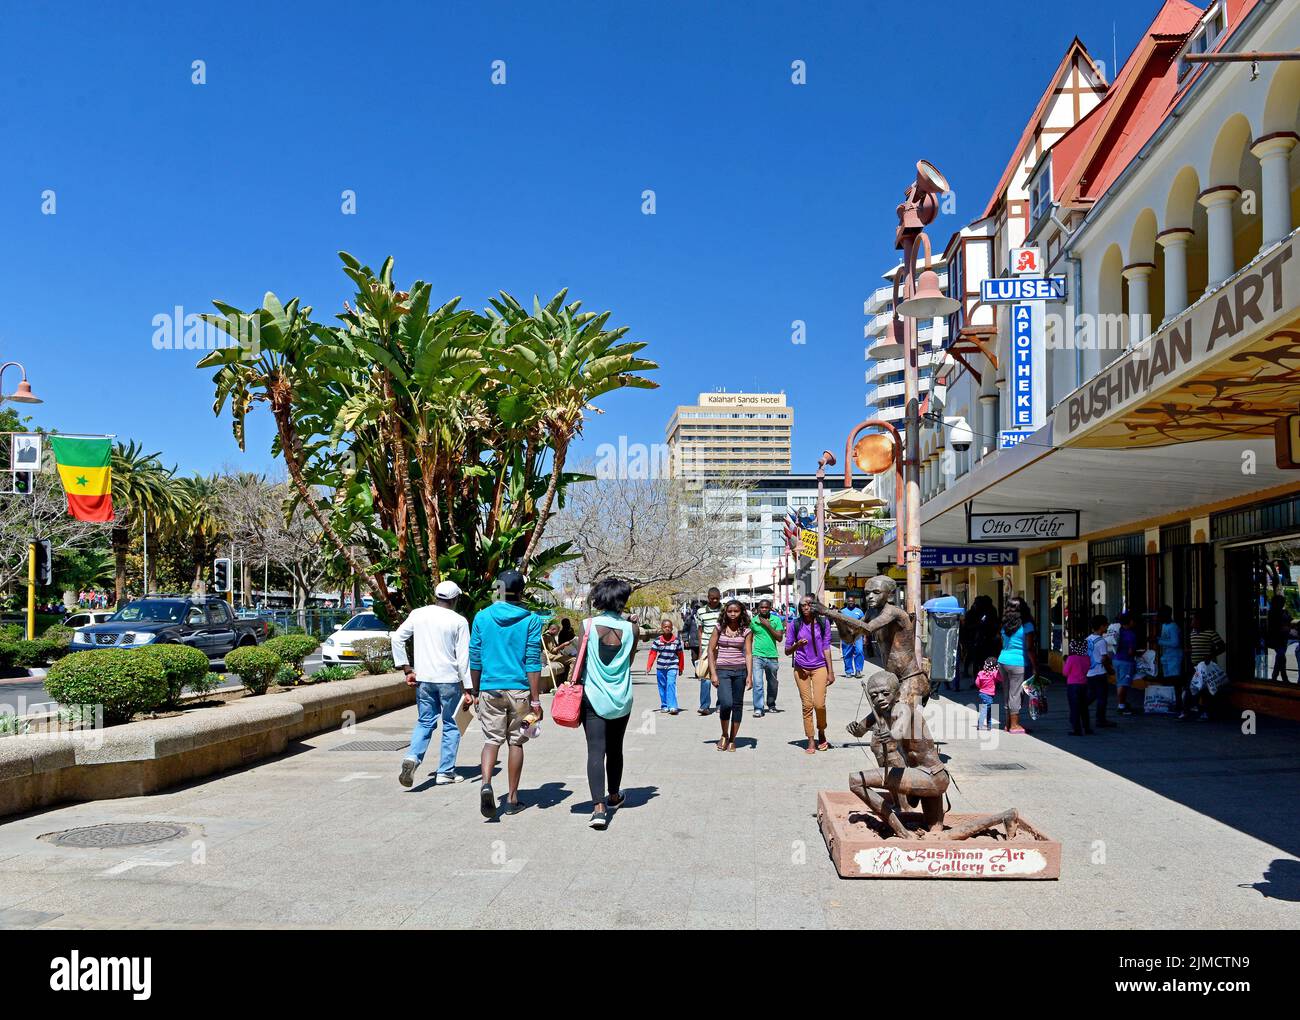 Shopping street in Windhoek Stock Photo